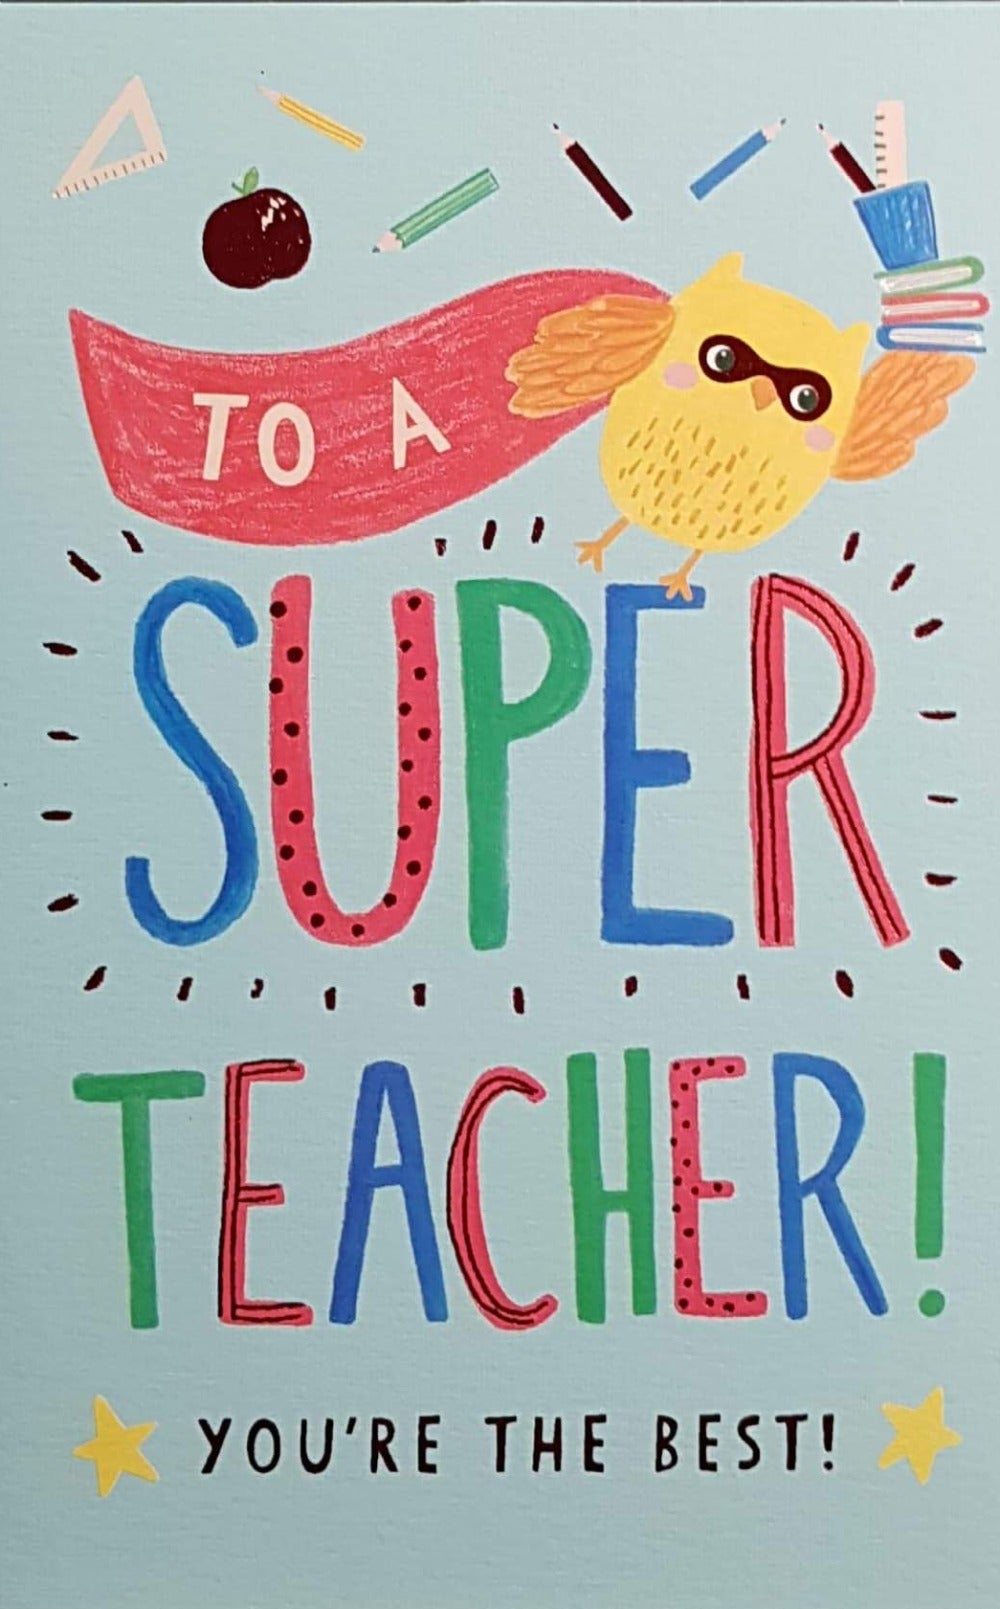 Thank You Card - Teacher / The Yellow Owl Loosing School Accessories